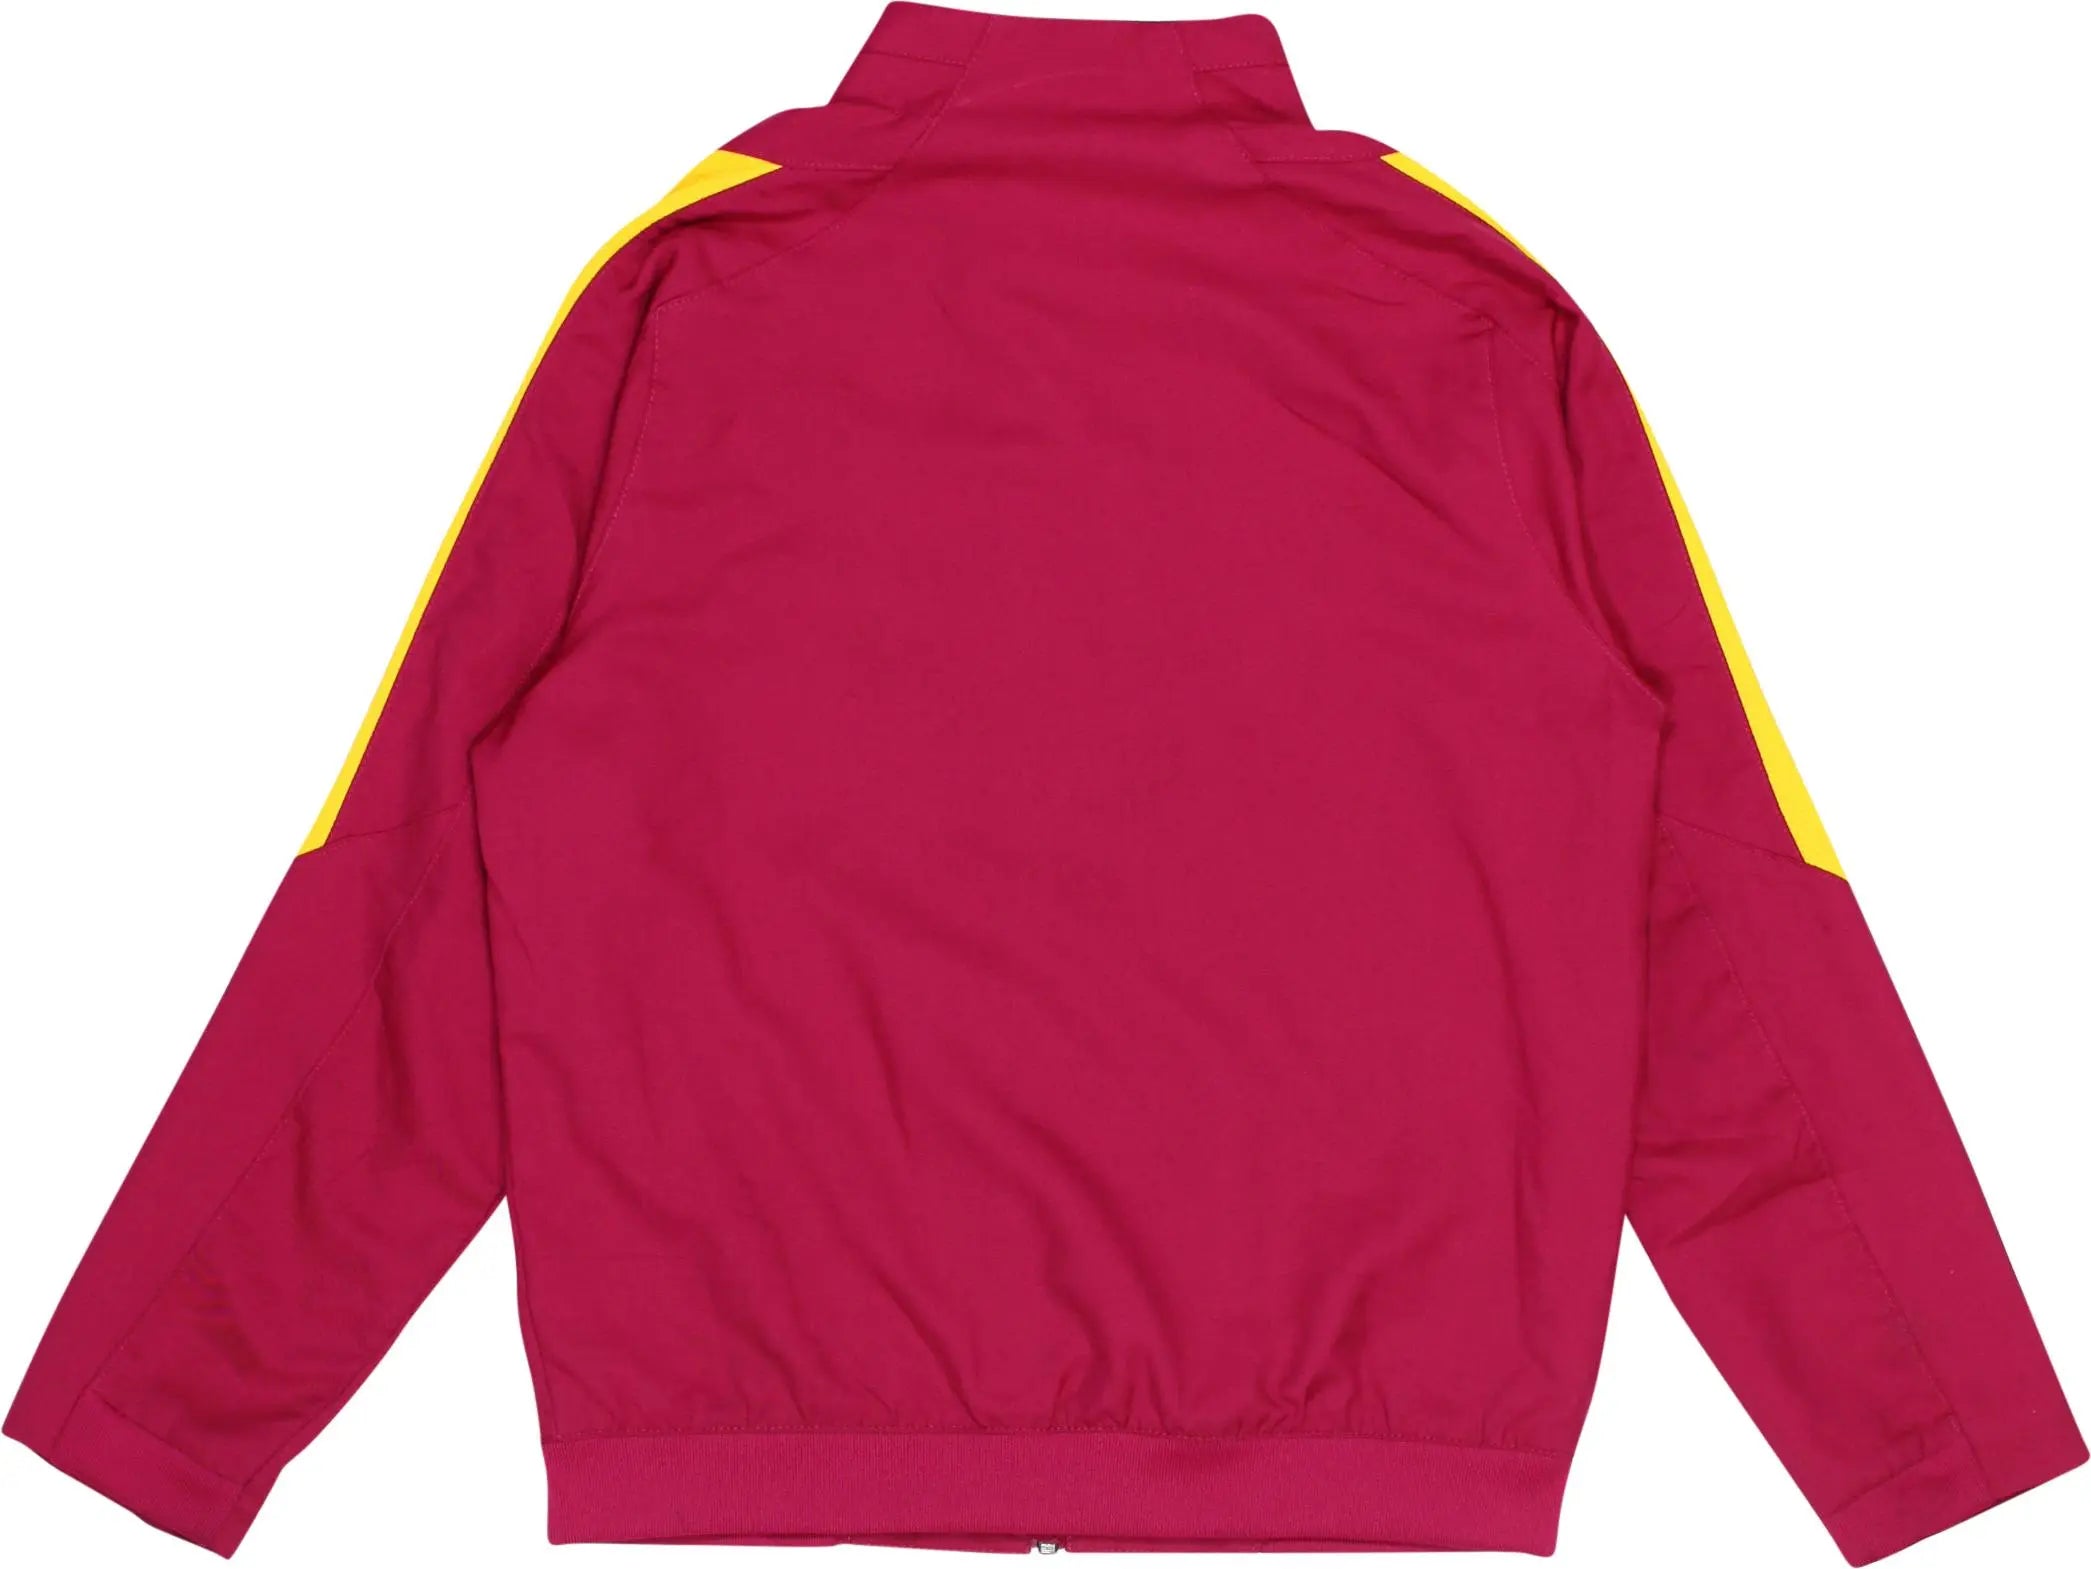 Nike - Purple FC Barcelona Jacket- ThriftTale.com - Vintage and second handclothing